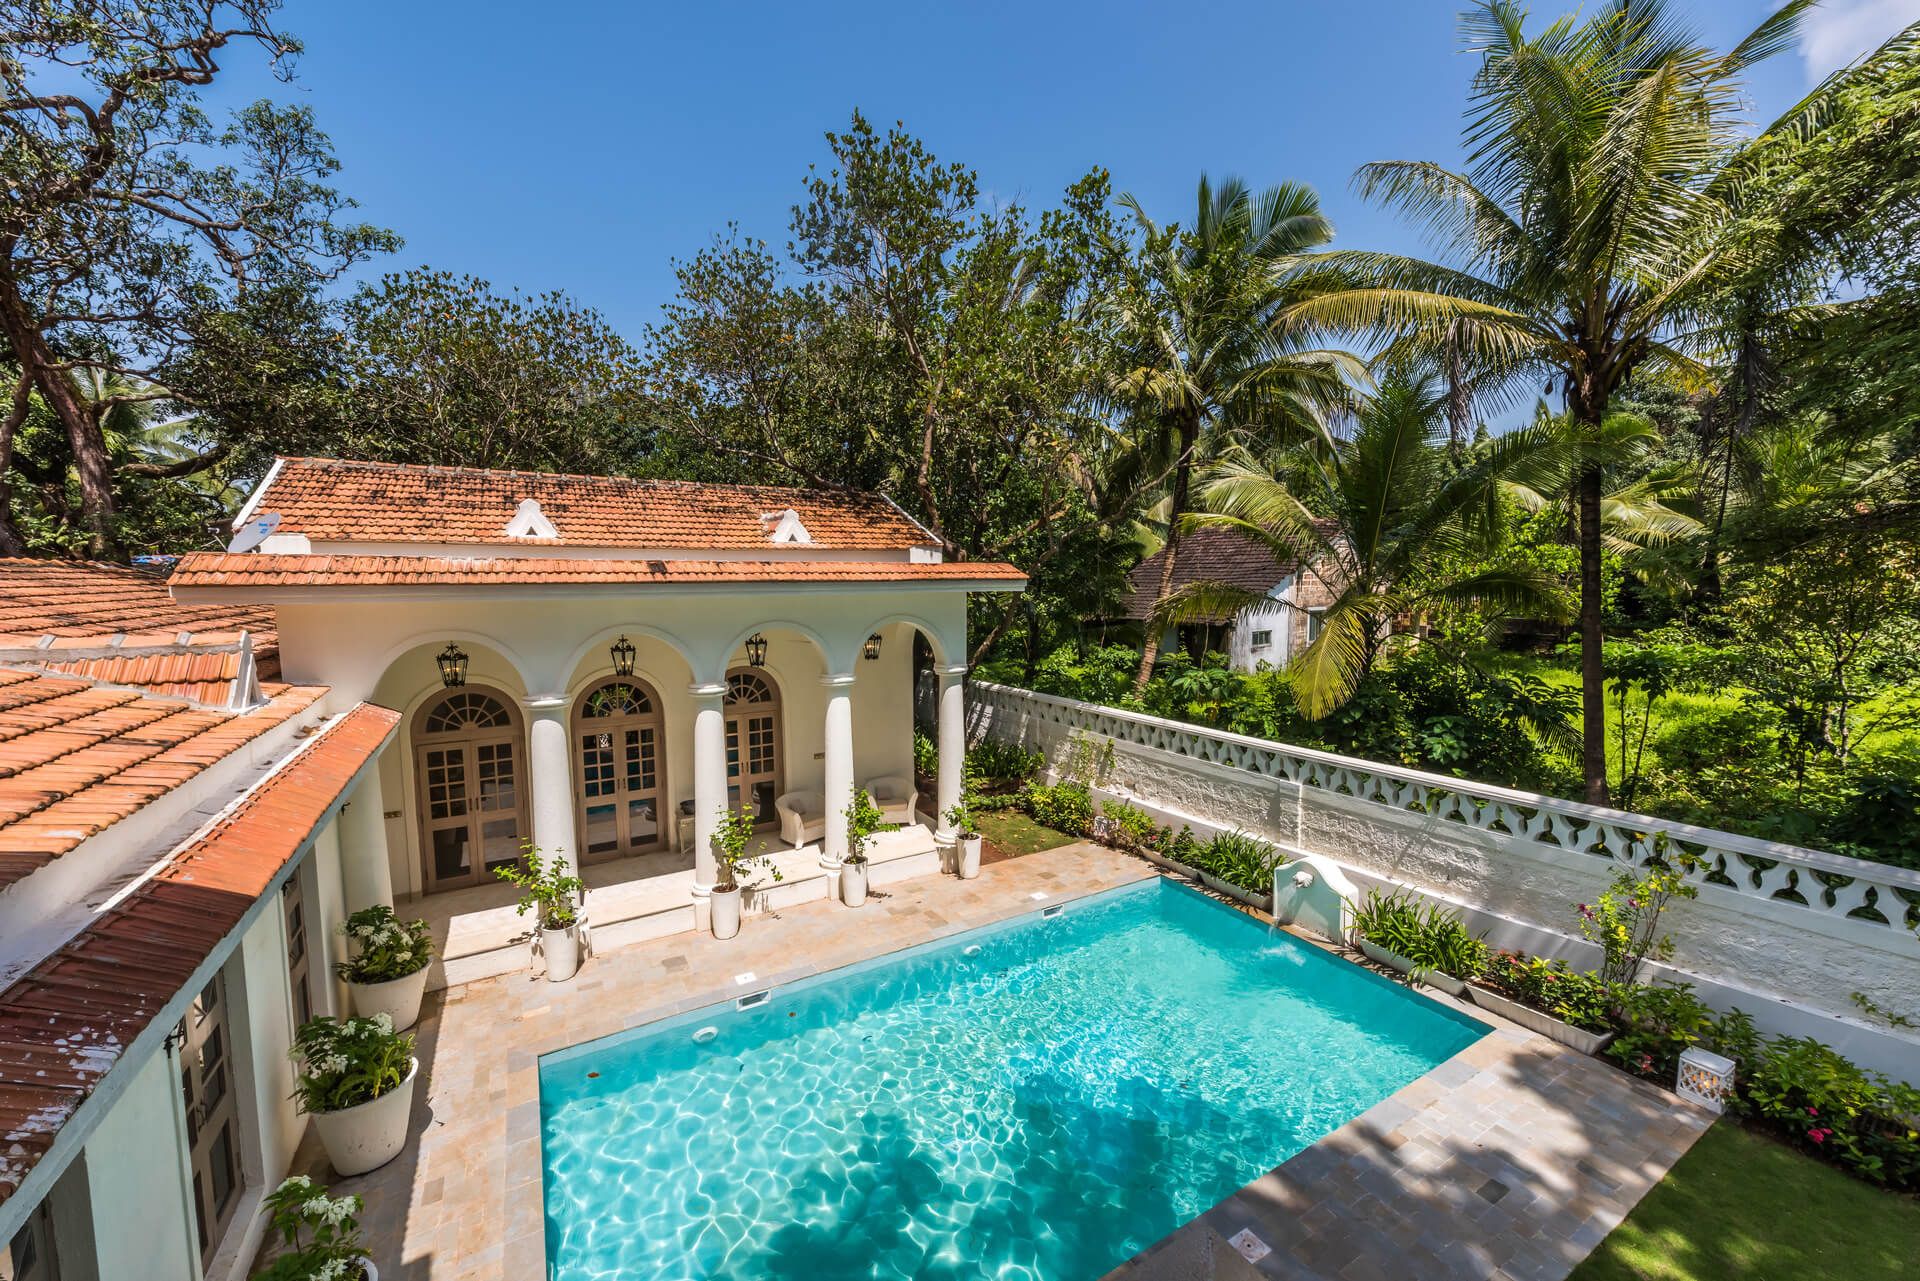 Sanitised pool villa for rent in Goa